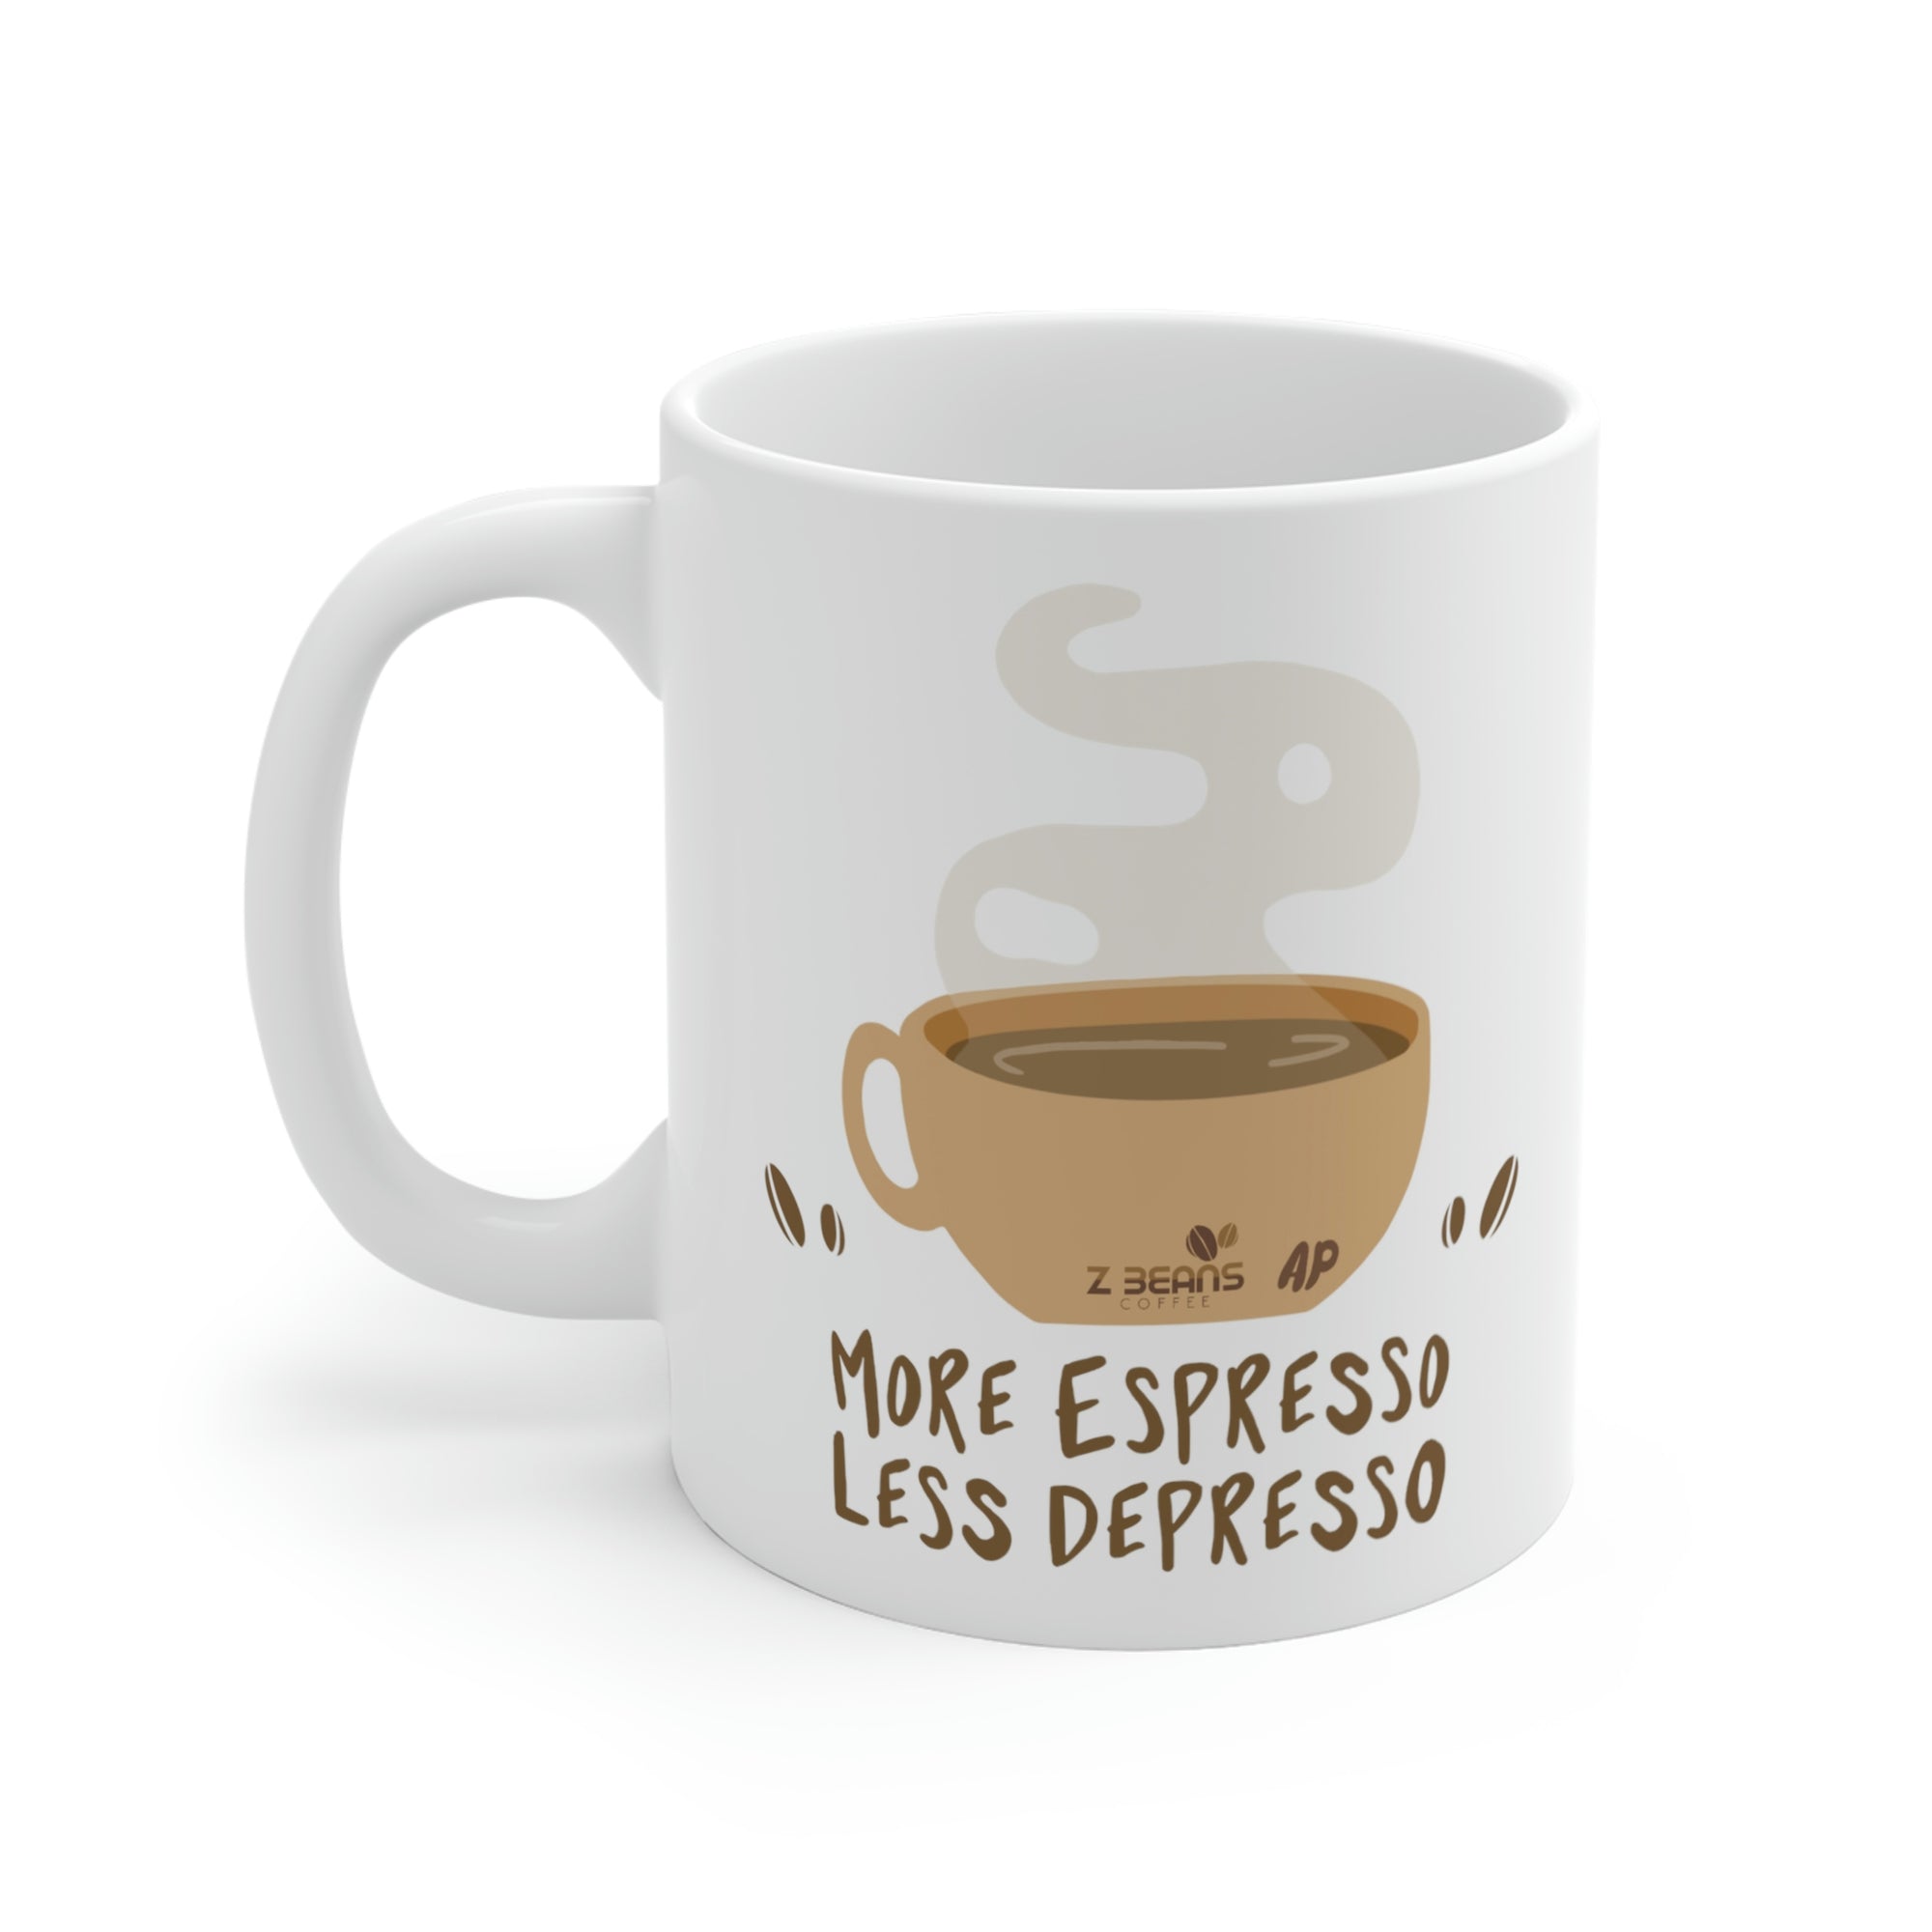 More Espresso Less Depresso - 11oz. Mug by Ashley Padilla